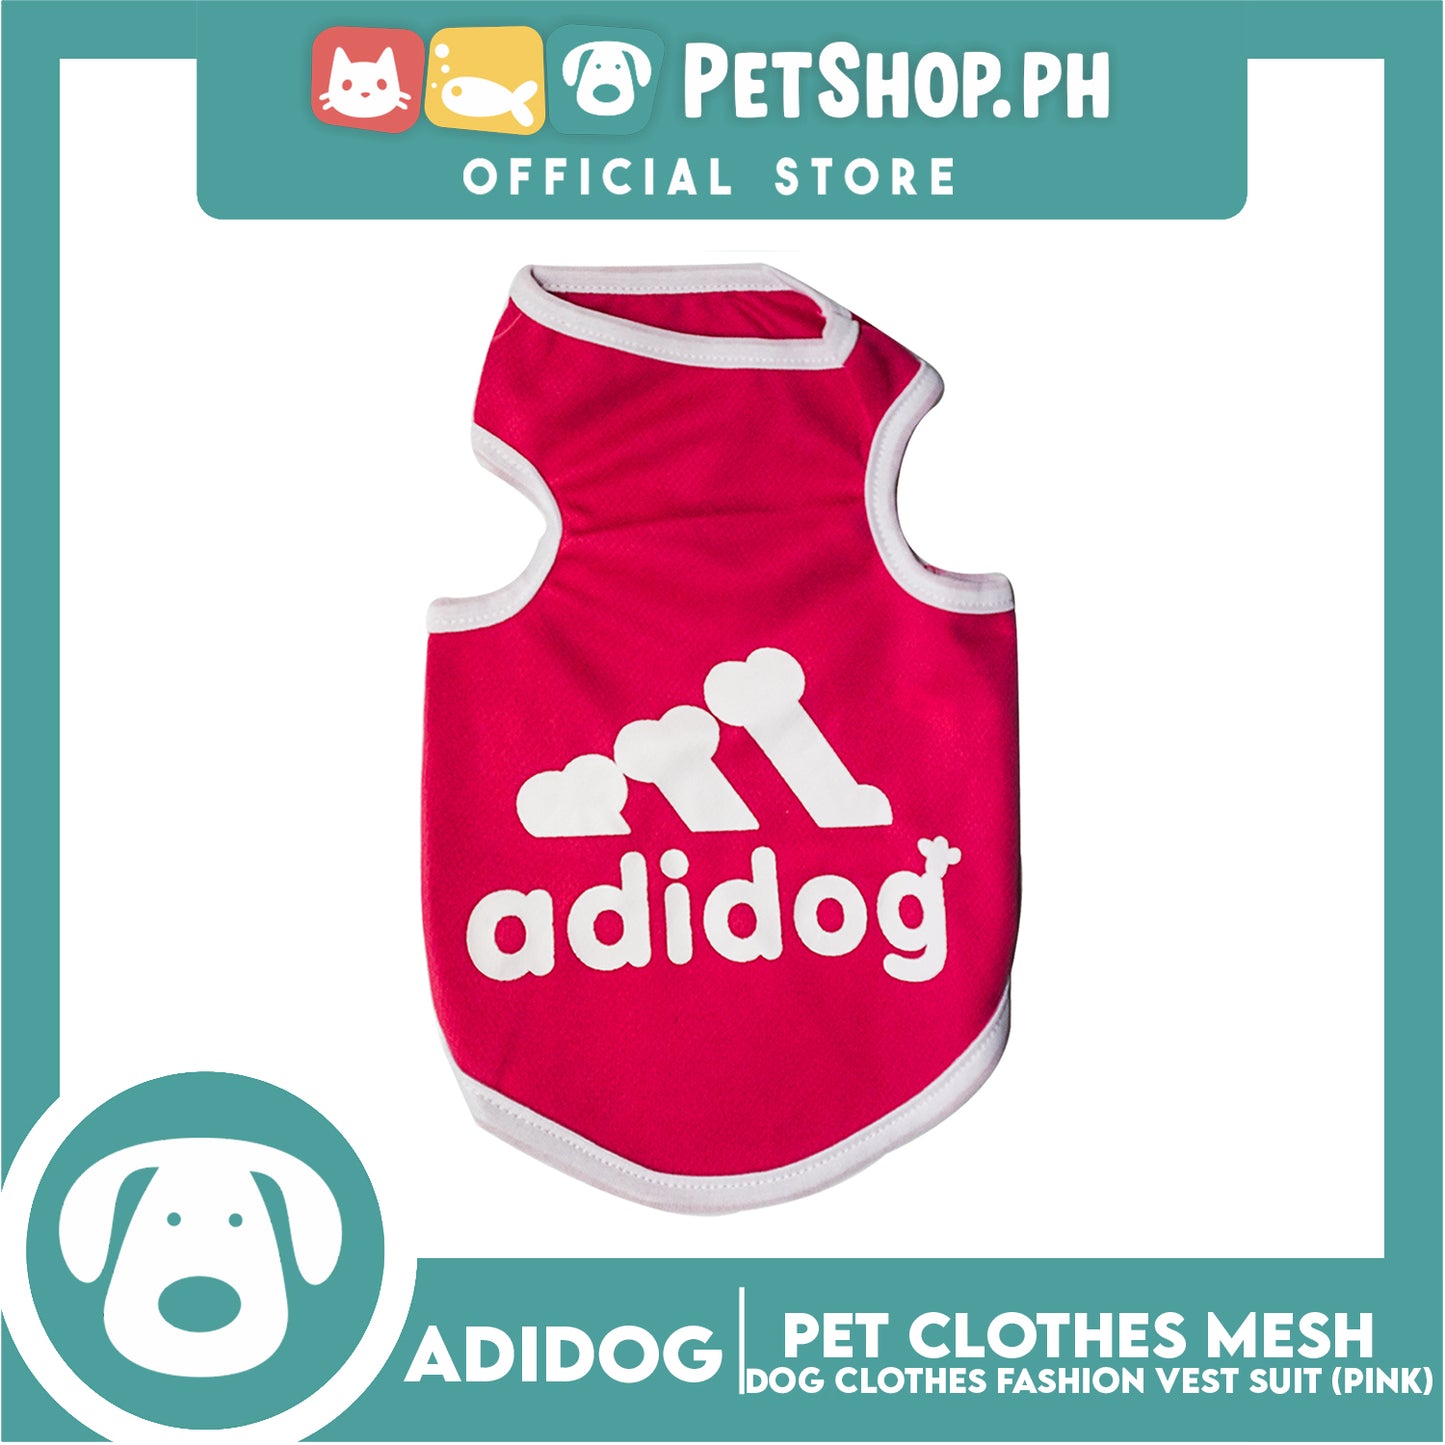 Adidog Pet Clothes Mesh Vet, Summer Dog Clothes, Breathable Mesh Vet, Dog Shirt, Pet Jersey, Fashion Vest Suit for Dogs (Pink) (Medium)